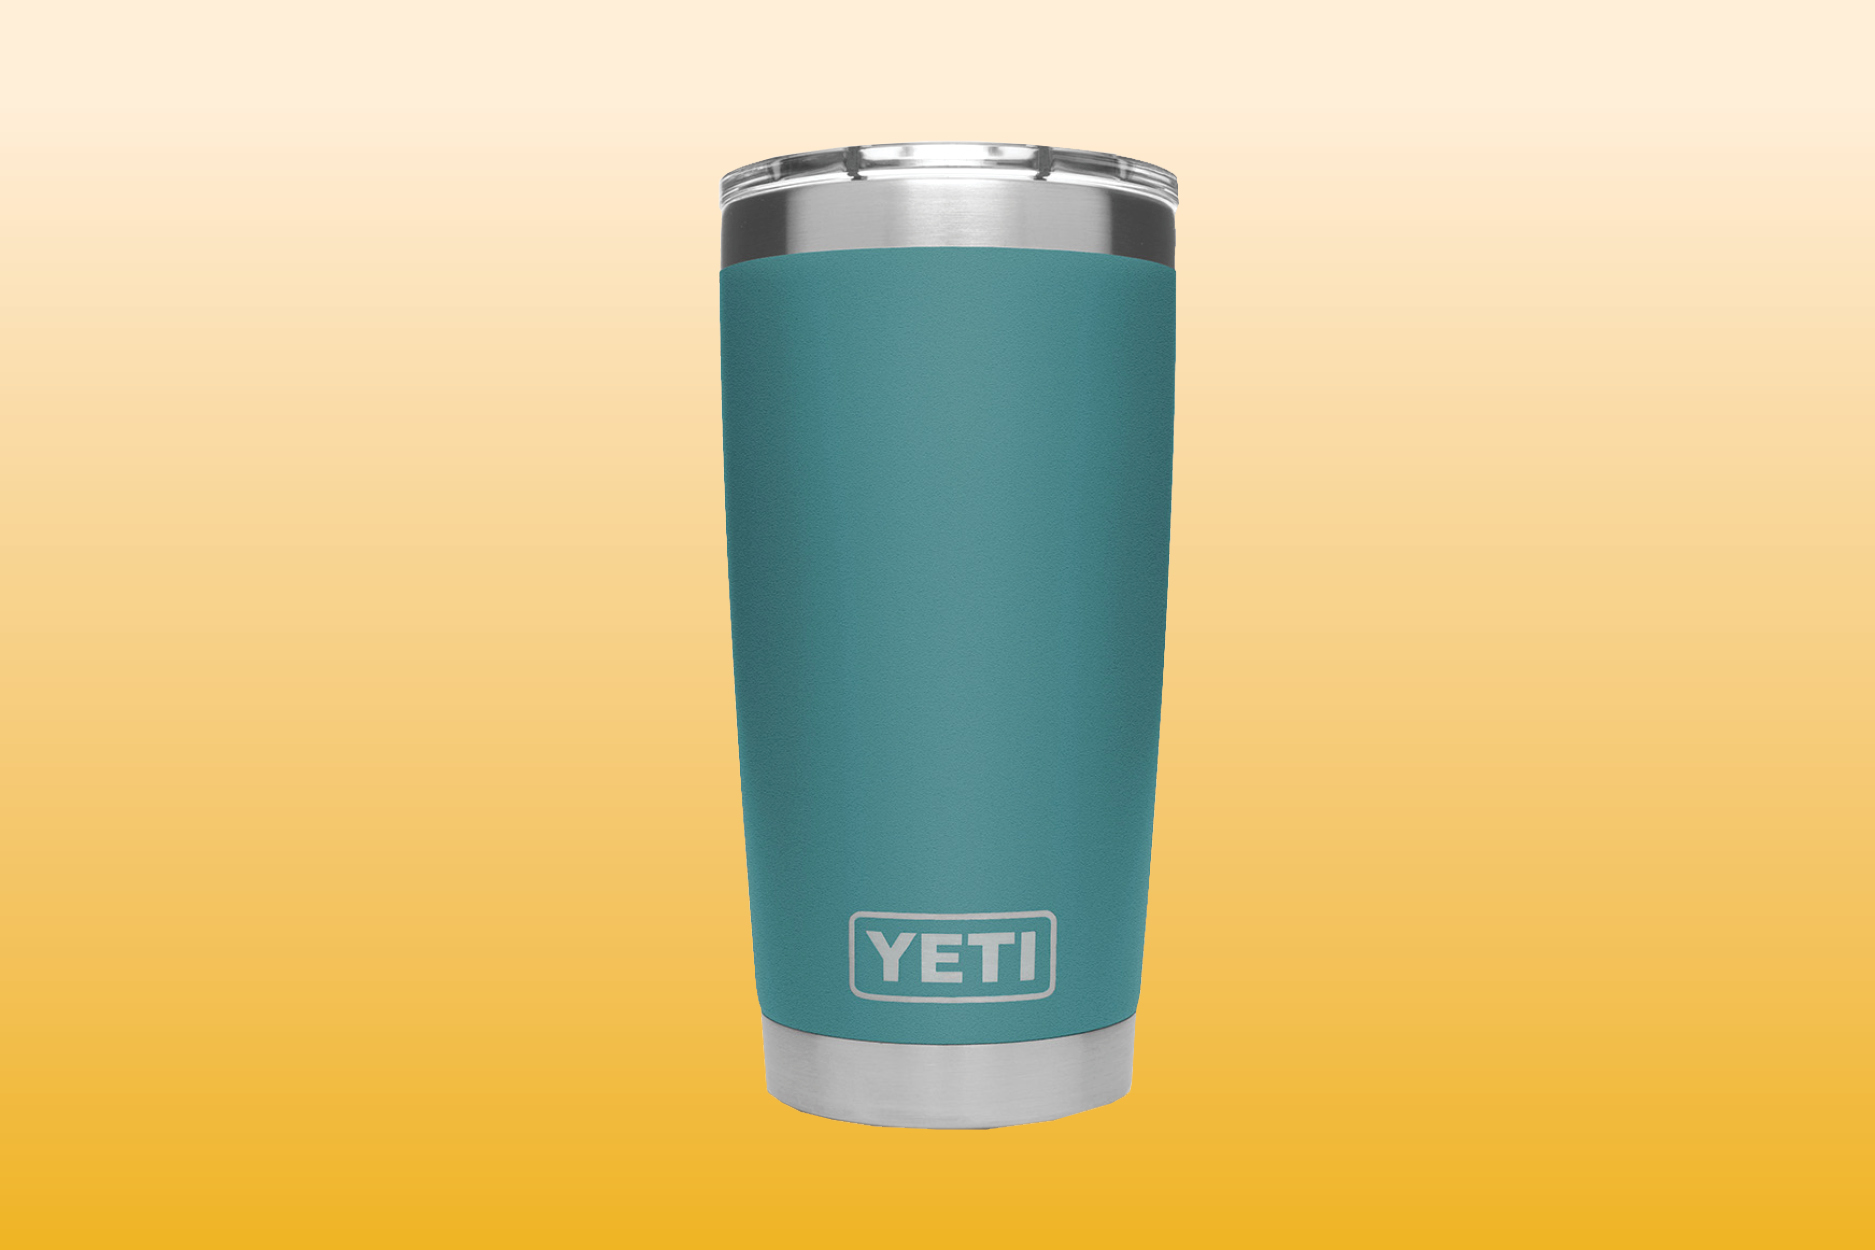 yeti drinking cups